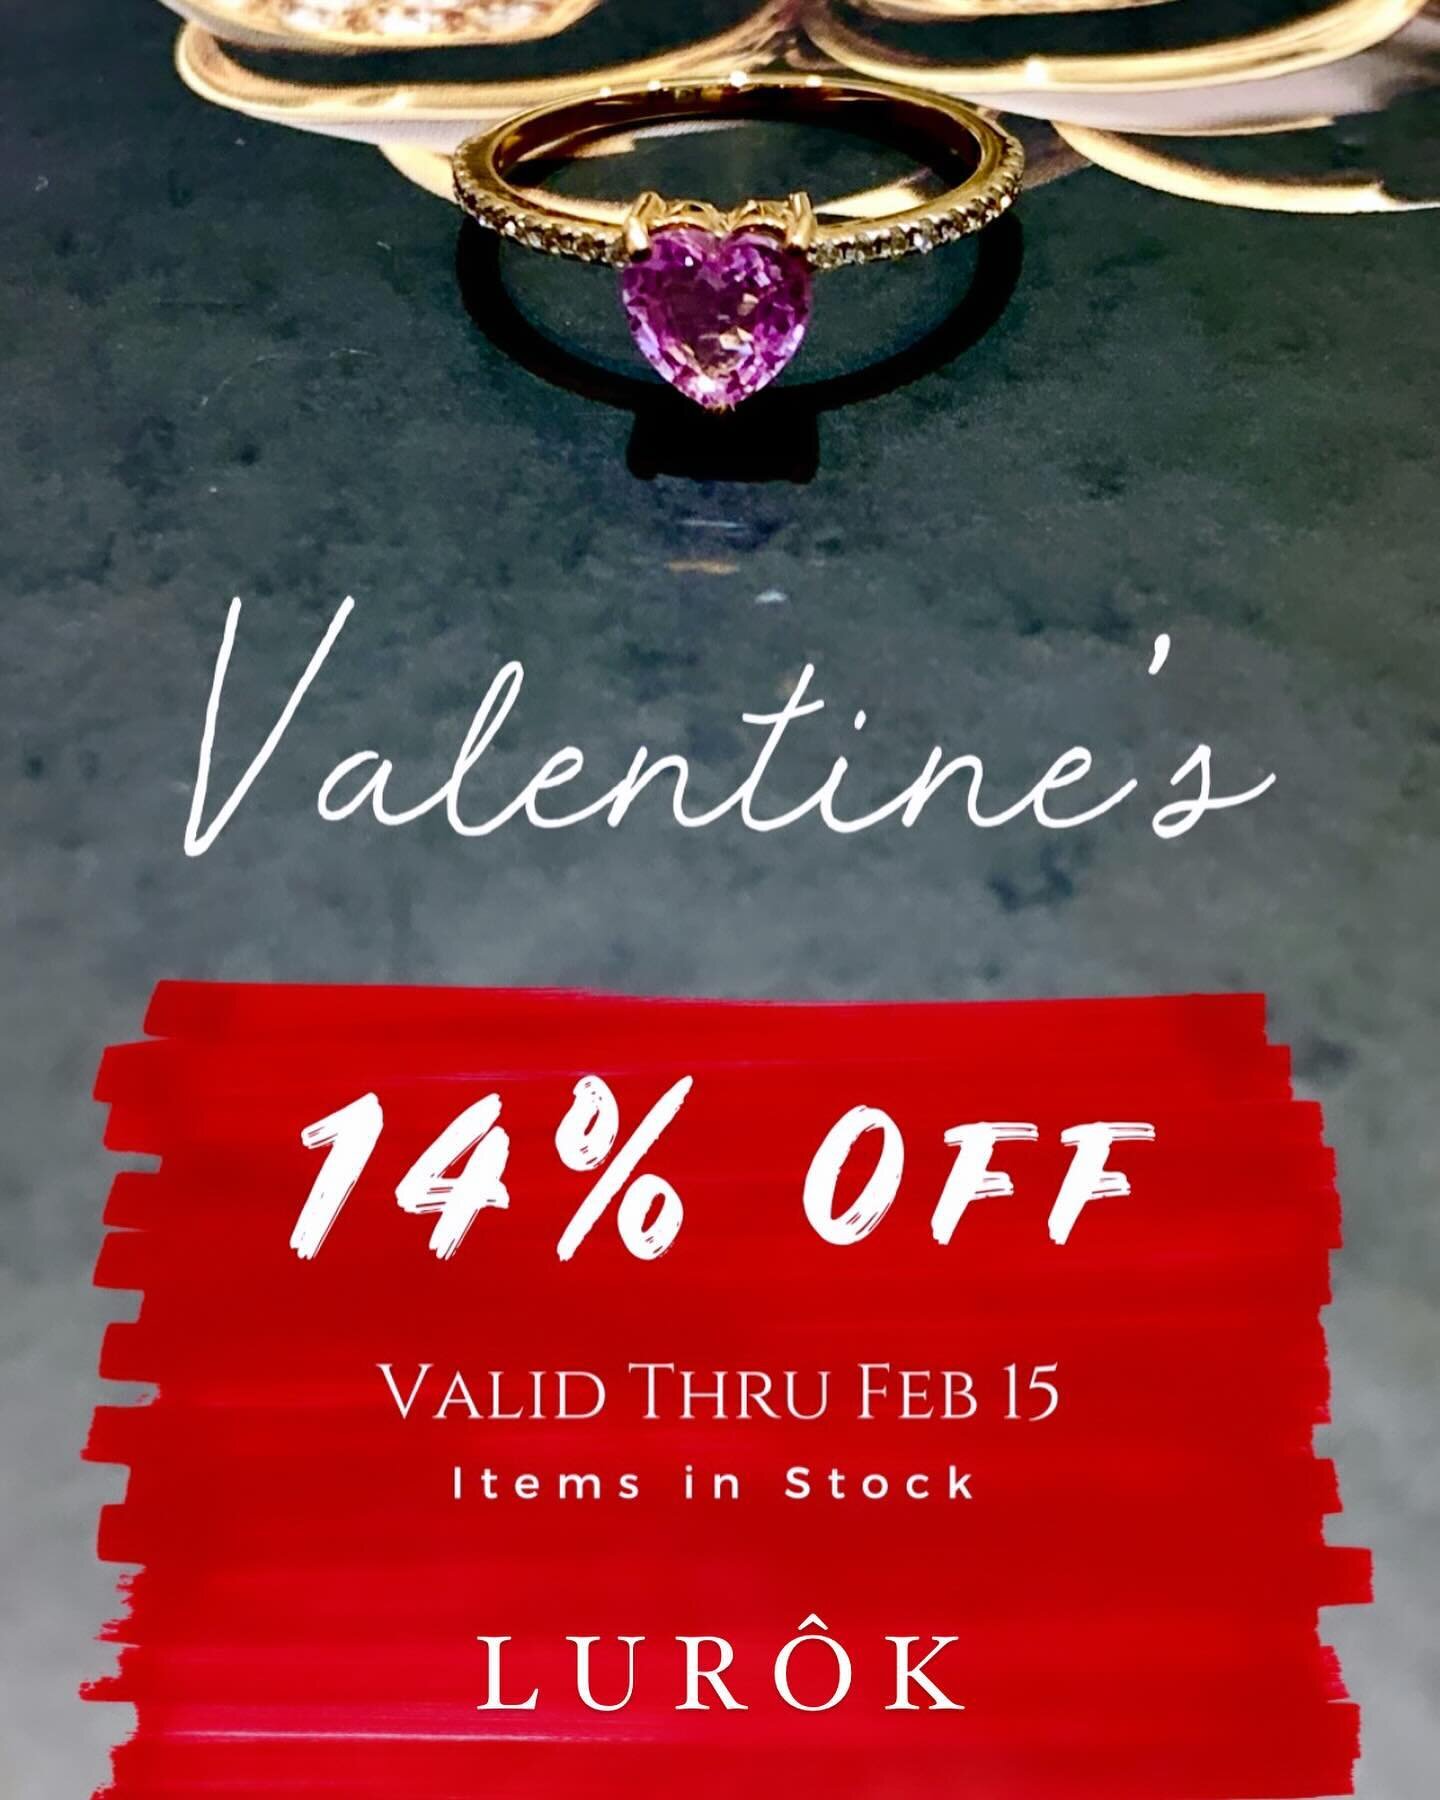 V-Day ❤️ 14% OFF 💕 
Exclusive items in stock 💜 
.
.
.
#valentines 💌 #love #finejewelry #goldjewellery #designjewelry #jewellery #luxury #luxuryjewelry #viacordillera #lurok #lurokjewelry